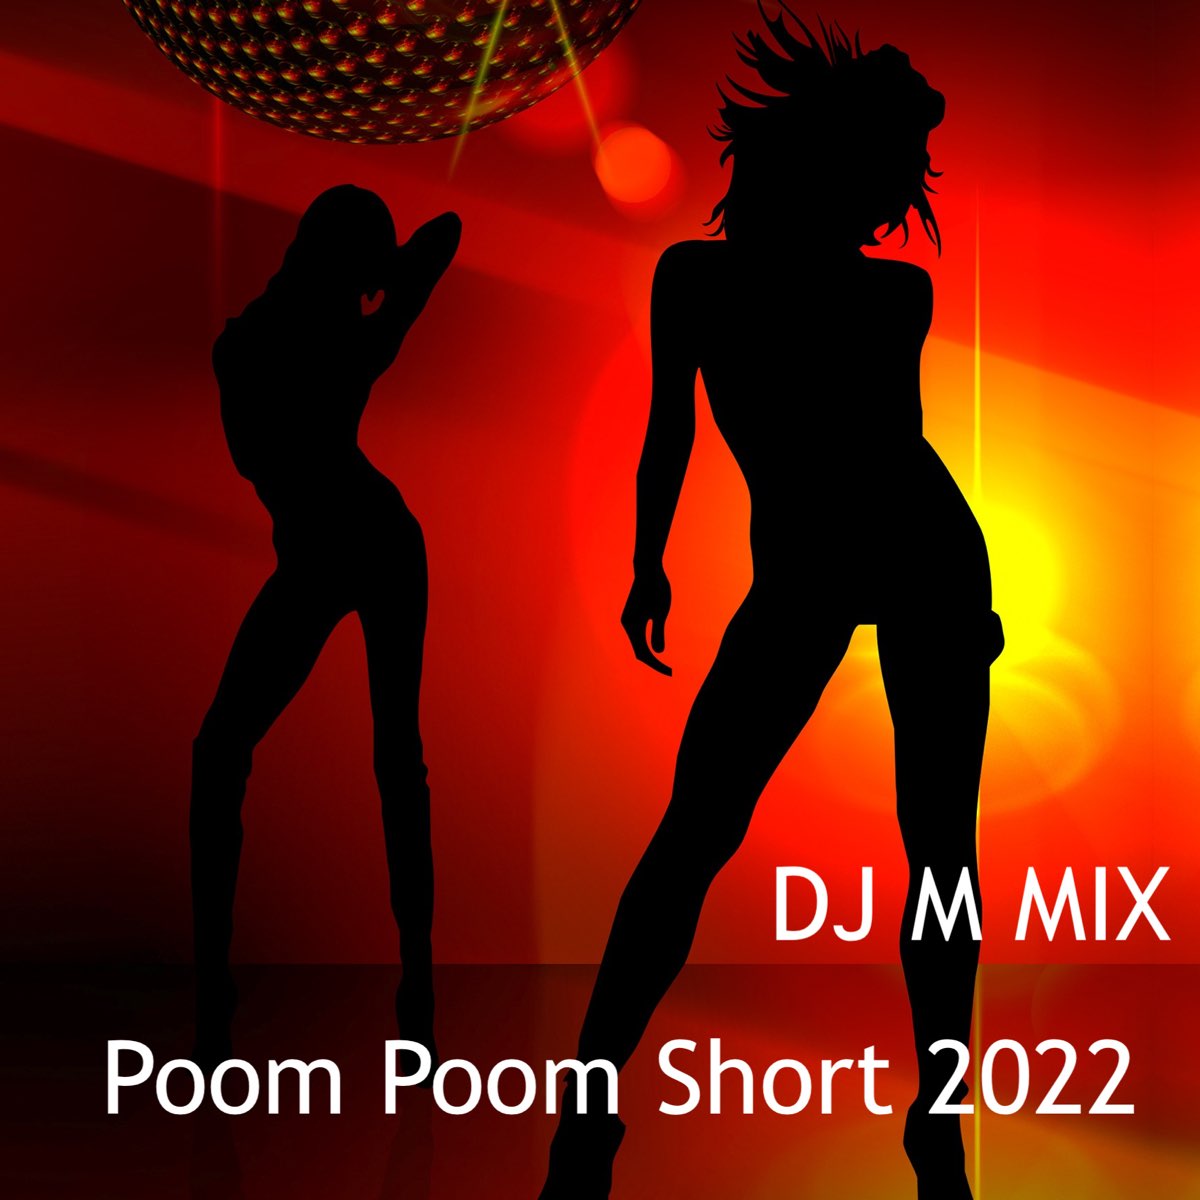 Poom Poom Short 2022 - Single by Dj m Mix on Apple Music